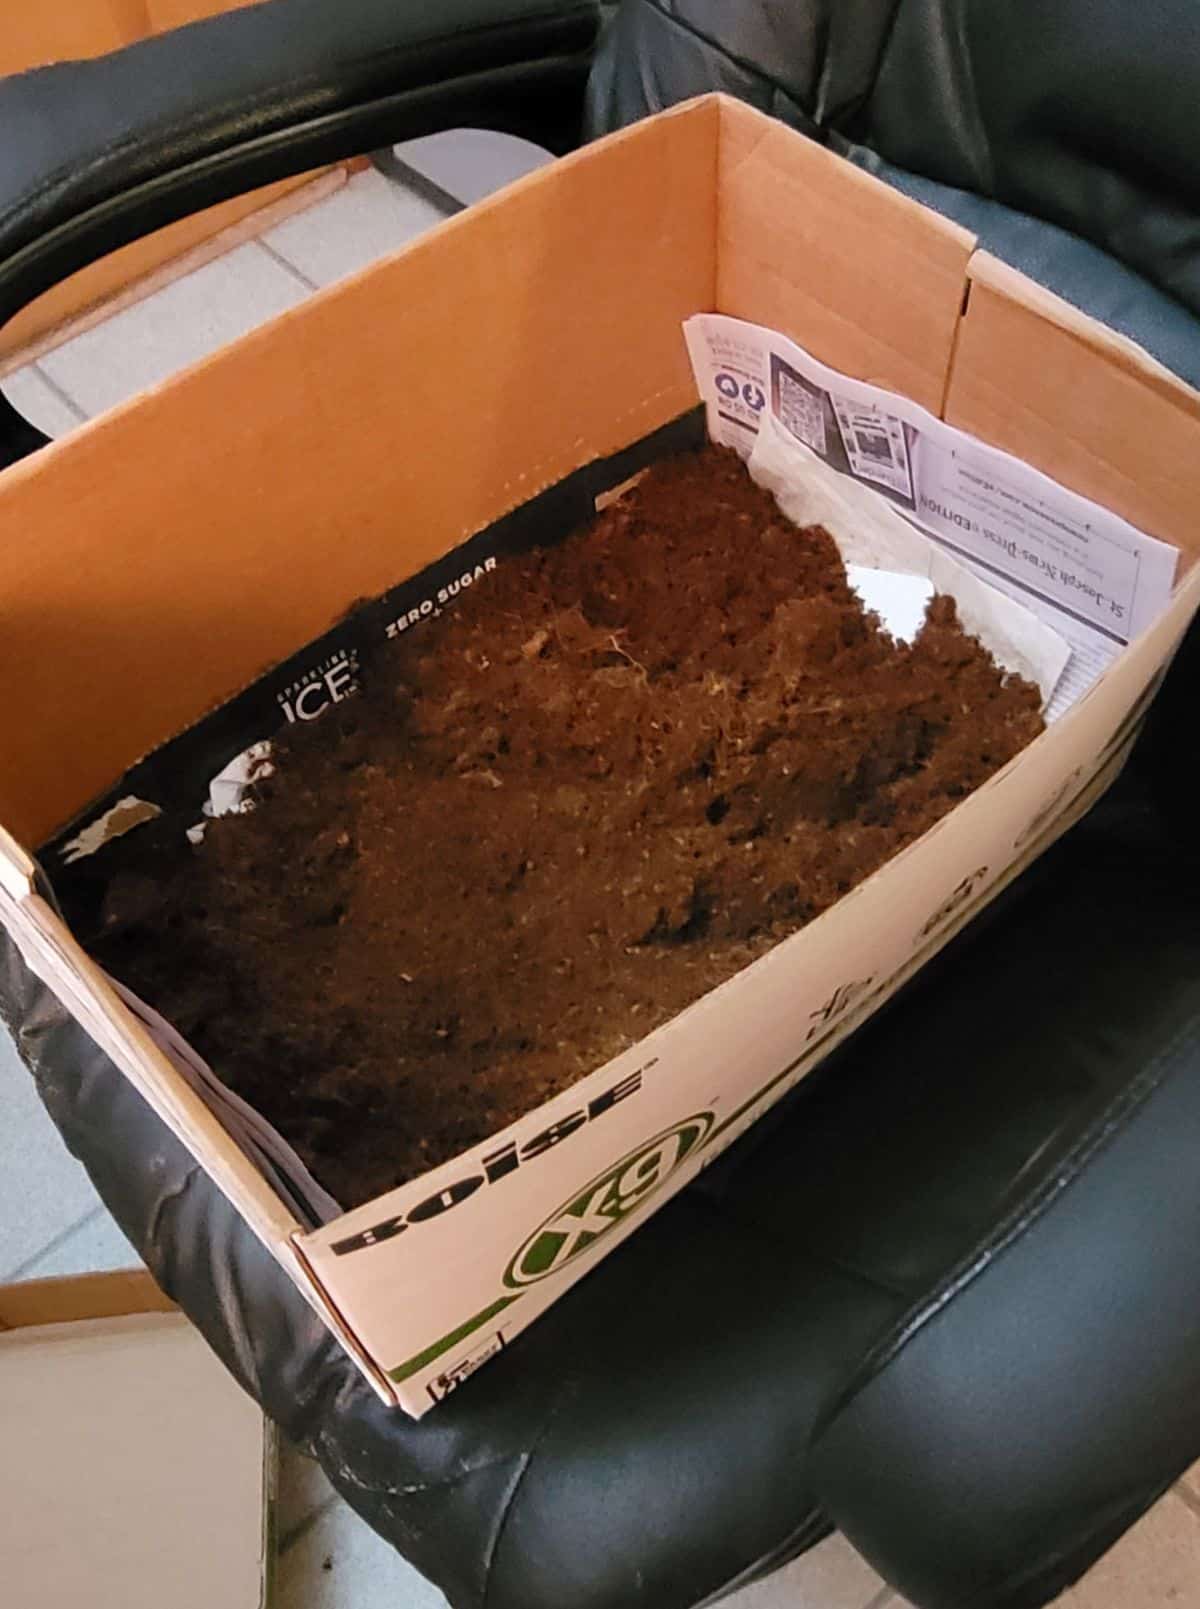 A medium sized box used for cardboard box composting